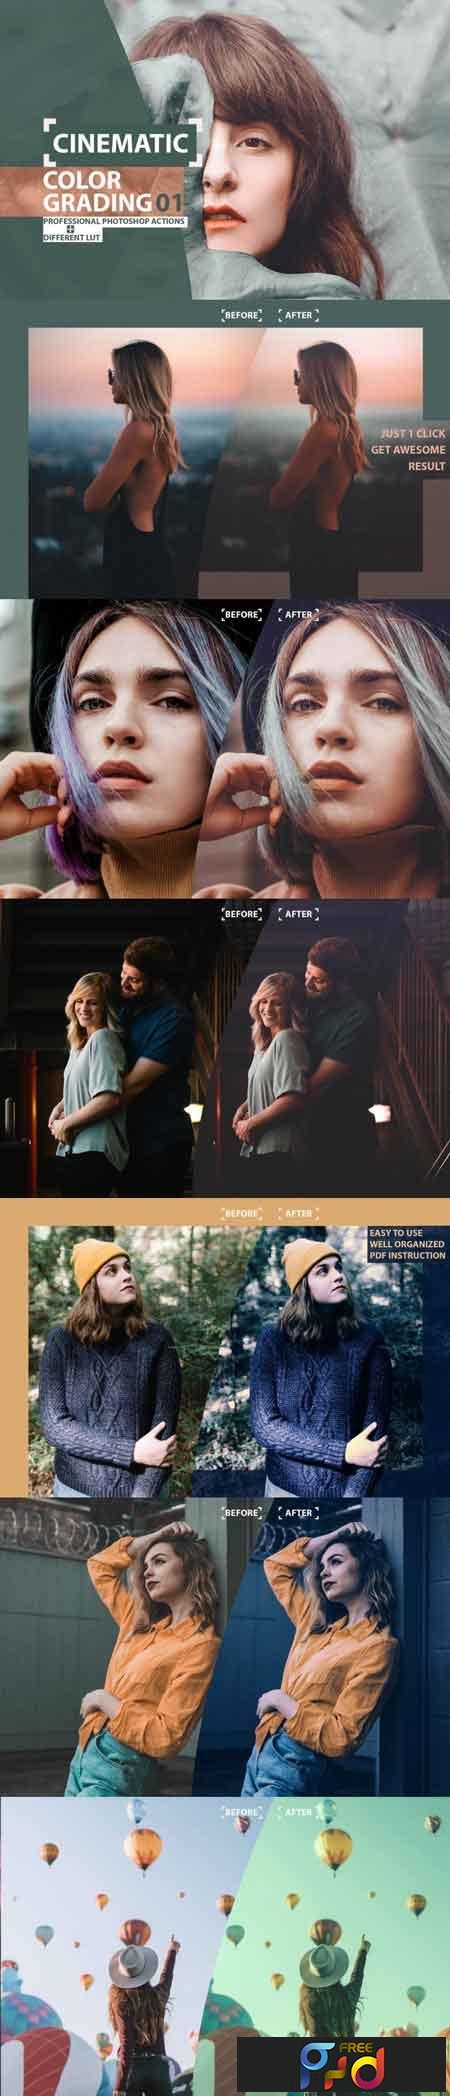 Cinematic Color Grading 01 Premium Photoshop Actions